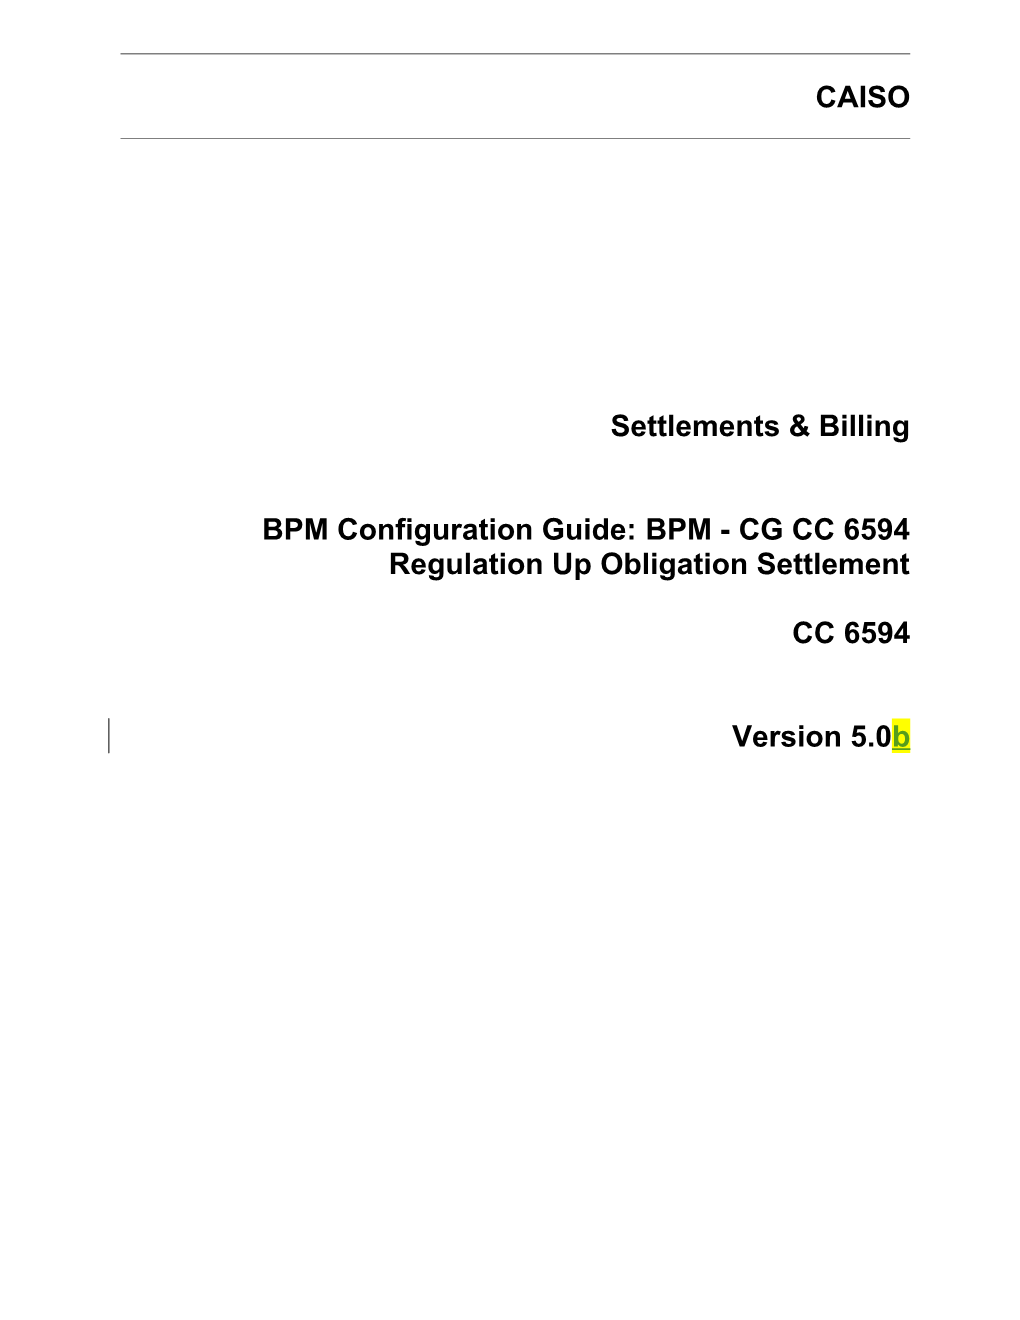 BPM - CG CC 6594 Regulation up Obligation Settlement